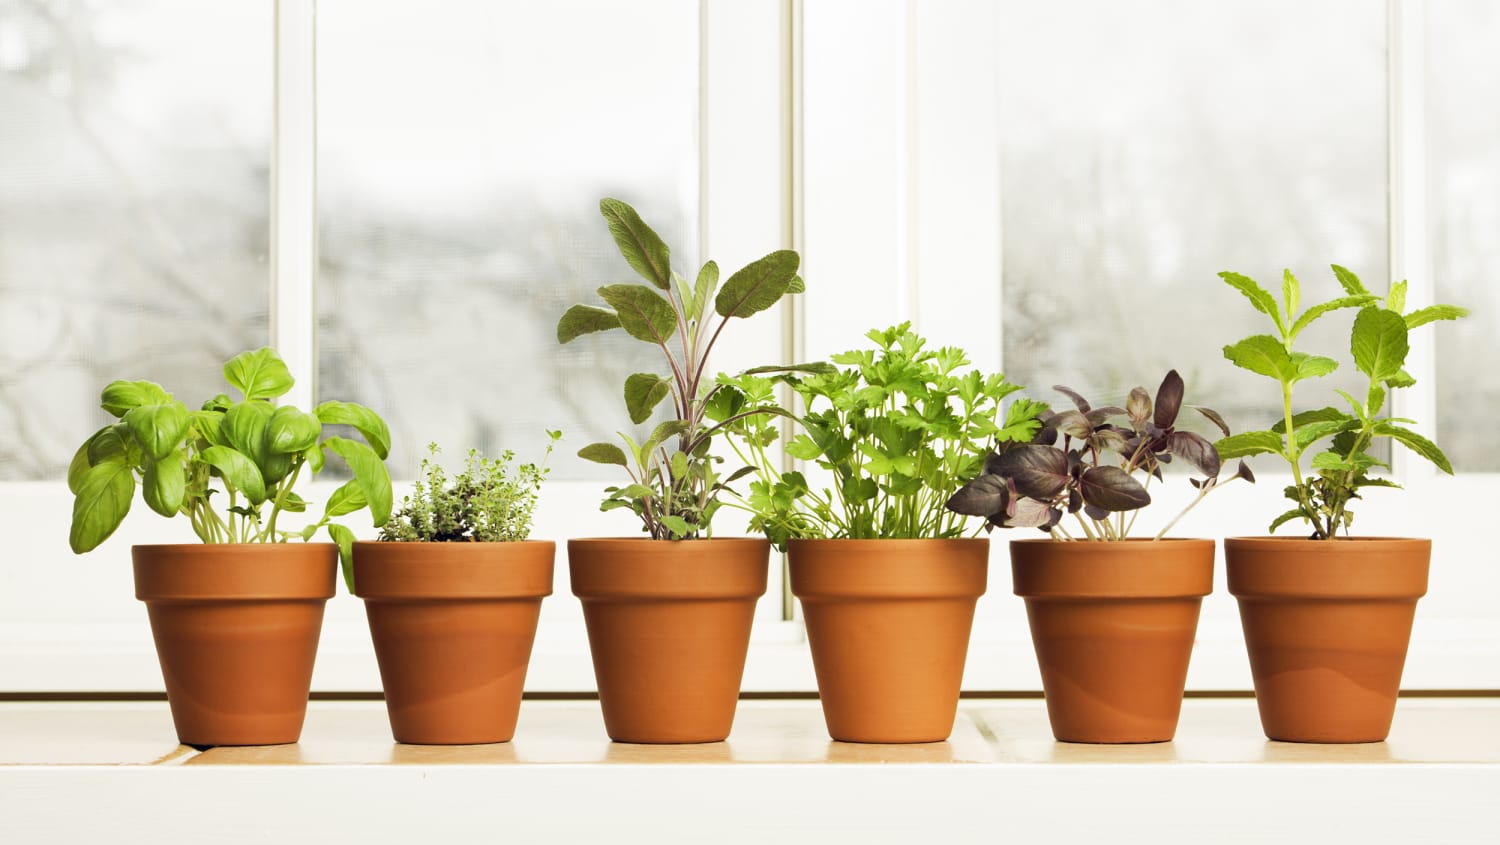 How to grow herbs indoors, create your own DIY herb garden